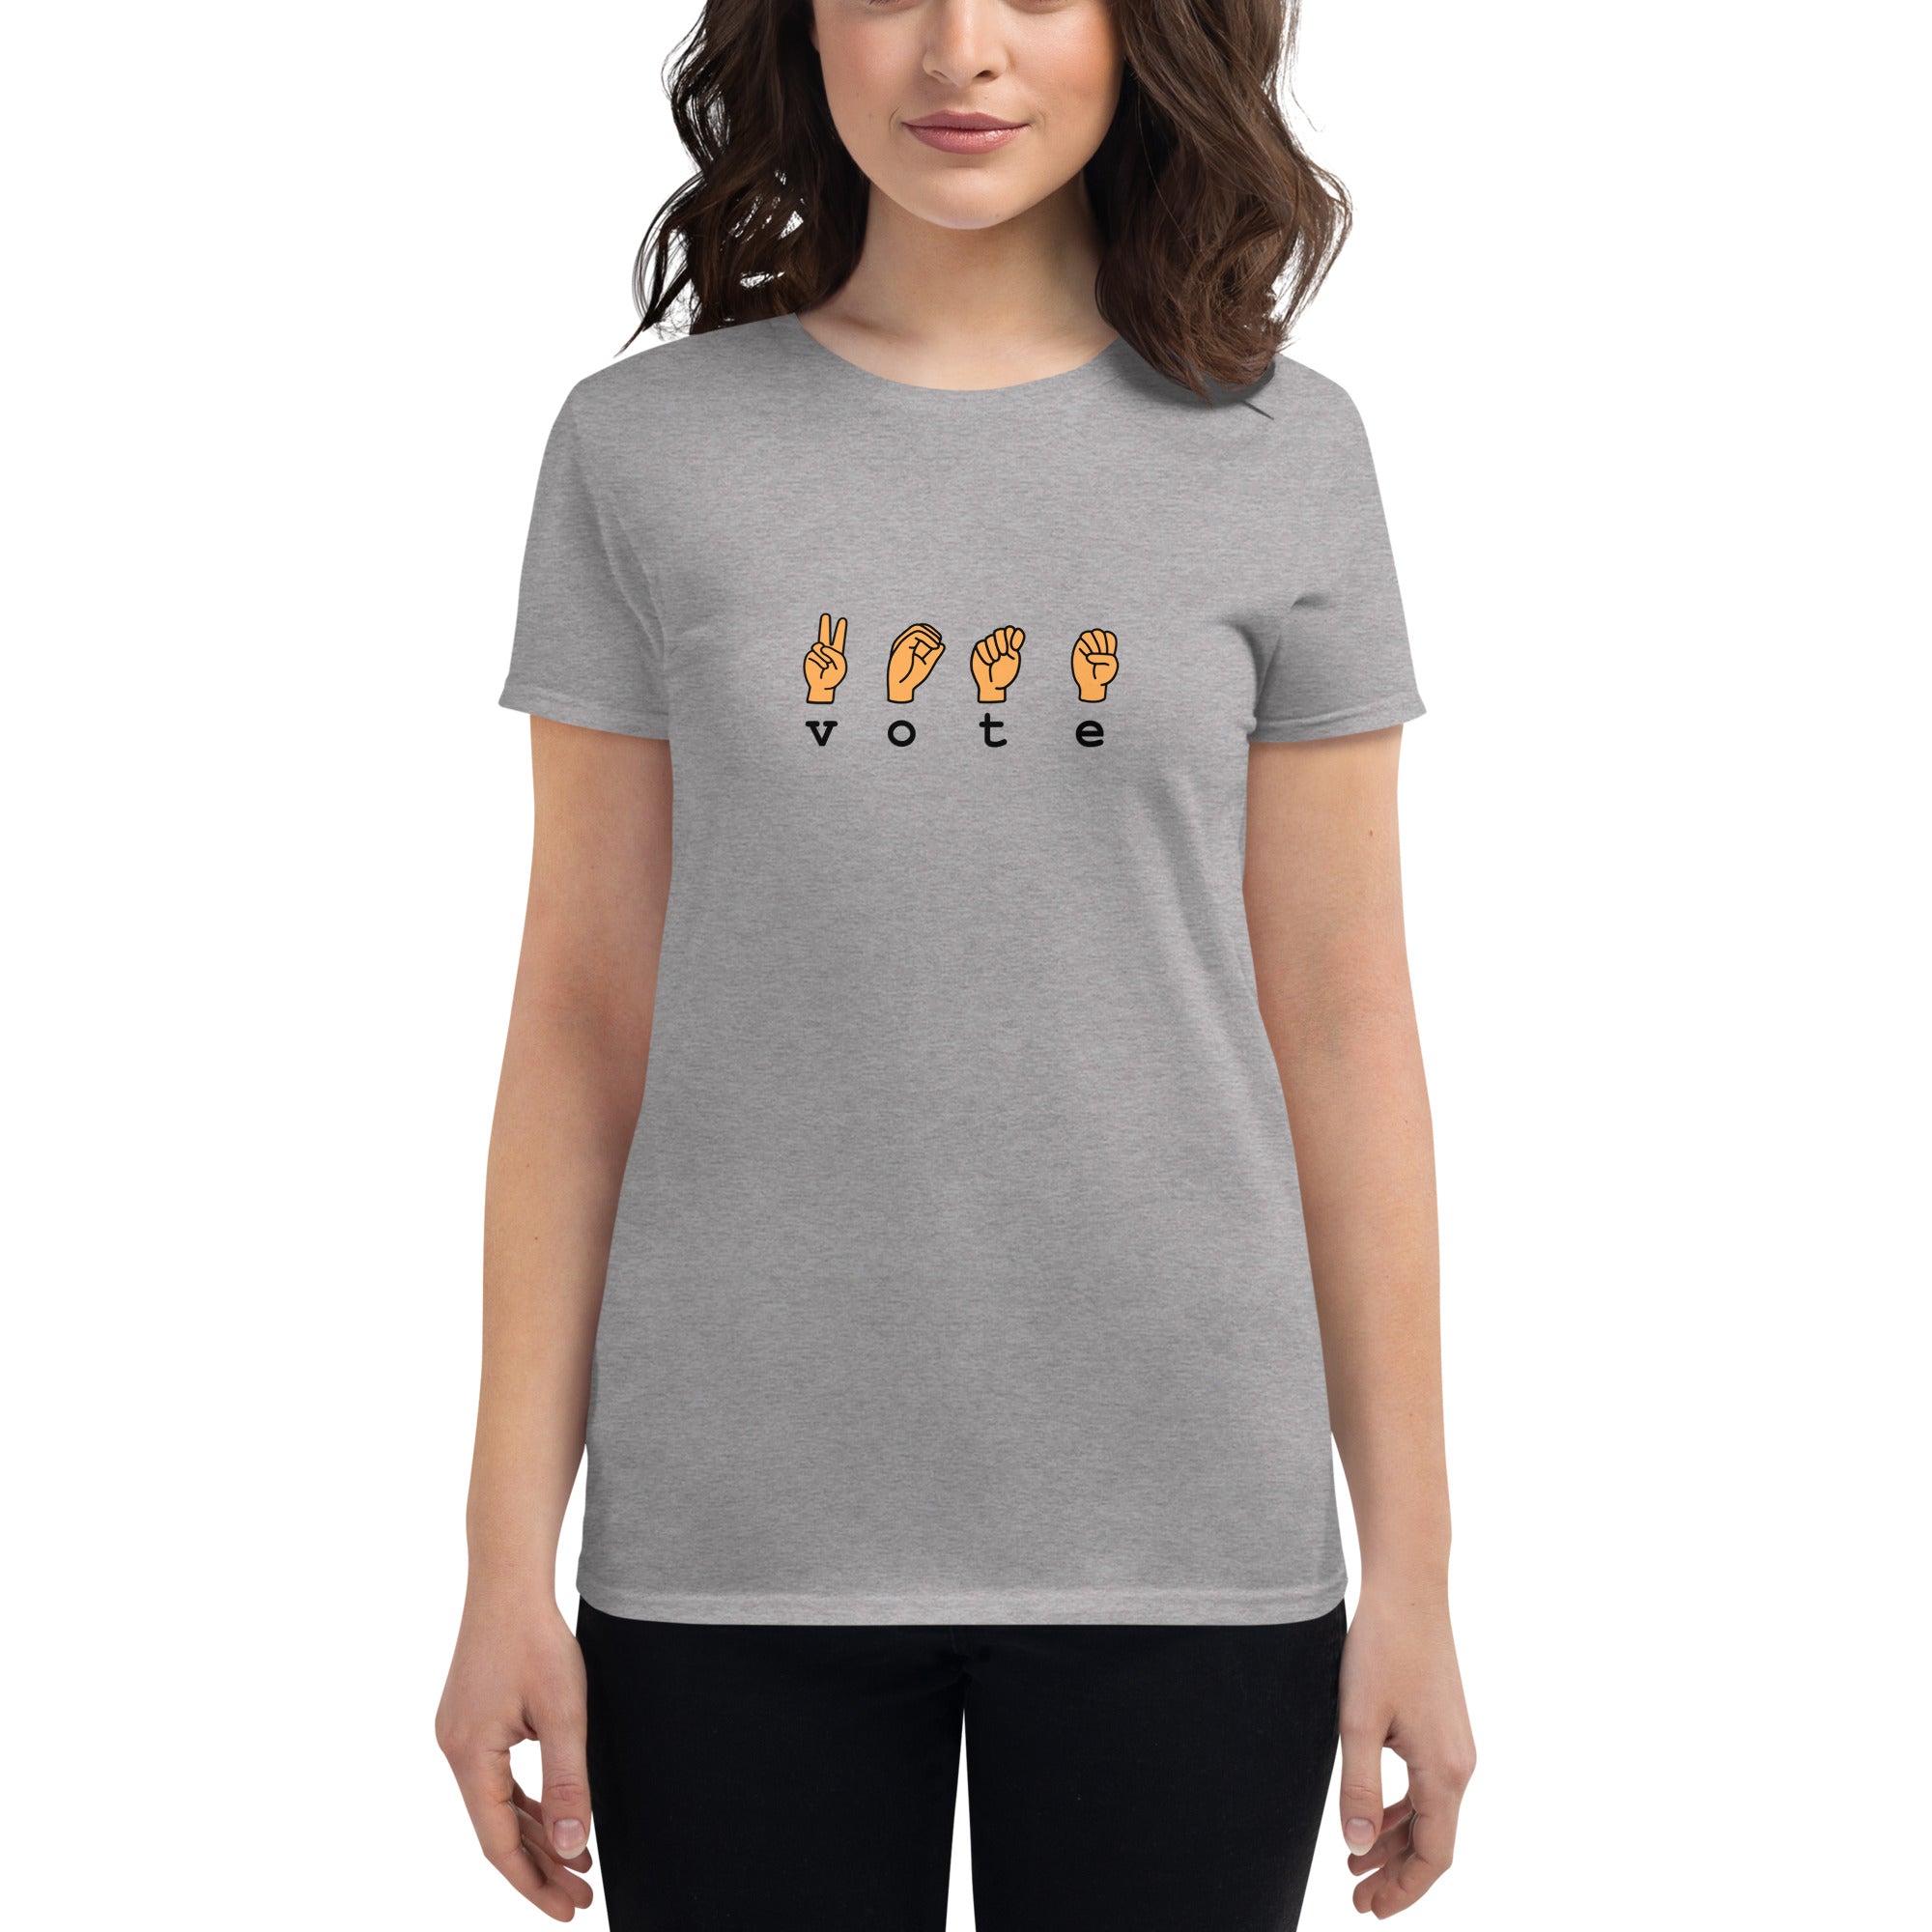 VOTE SIGN- Women's Short Sleeve T-shirt